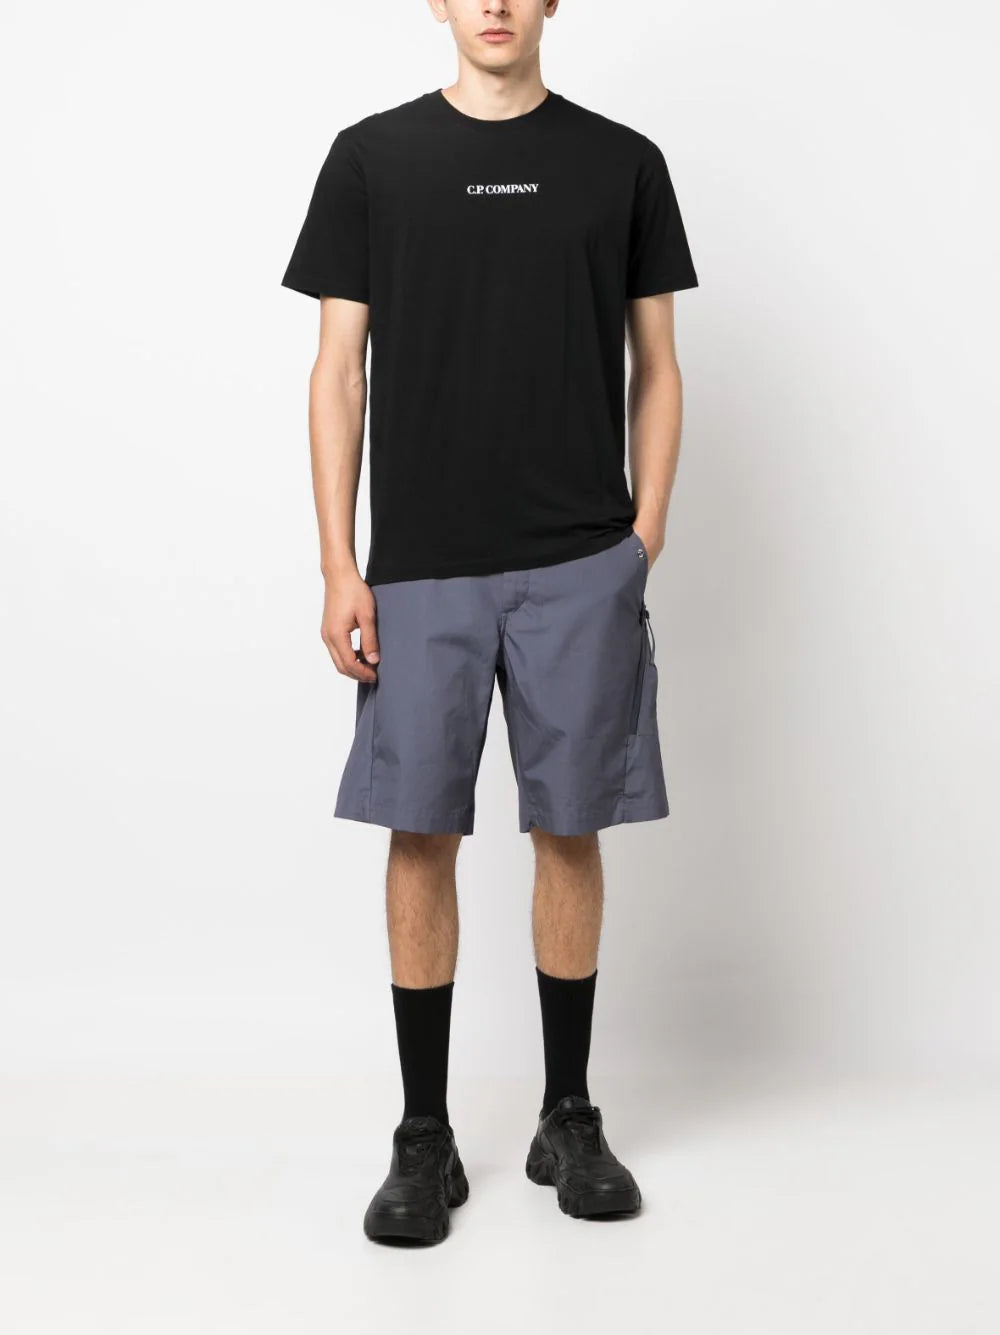 C.P COMPANY MEN 30/1 Jersey Blurry Logo T-Shirt Black - MAISONDEFASHION.COM